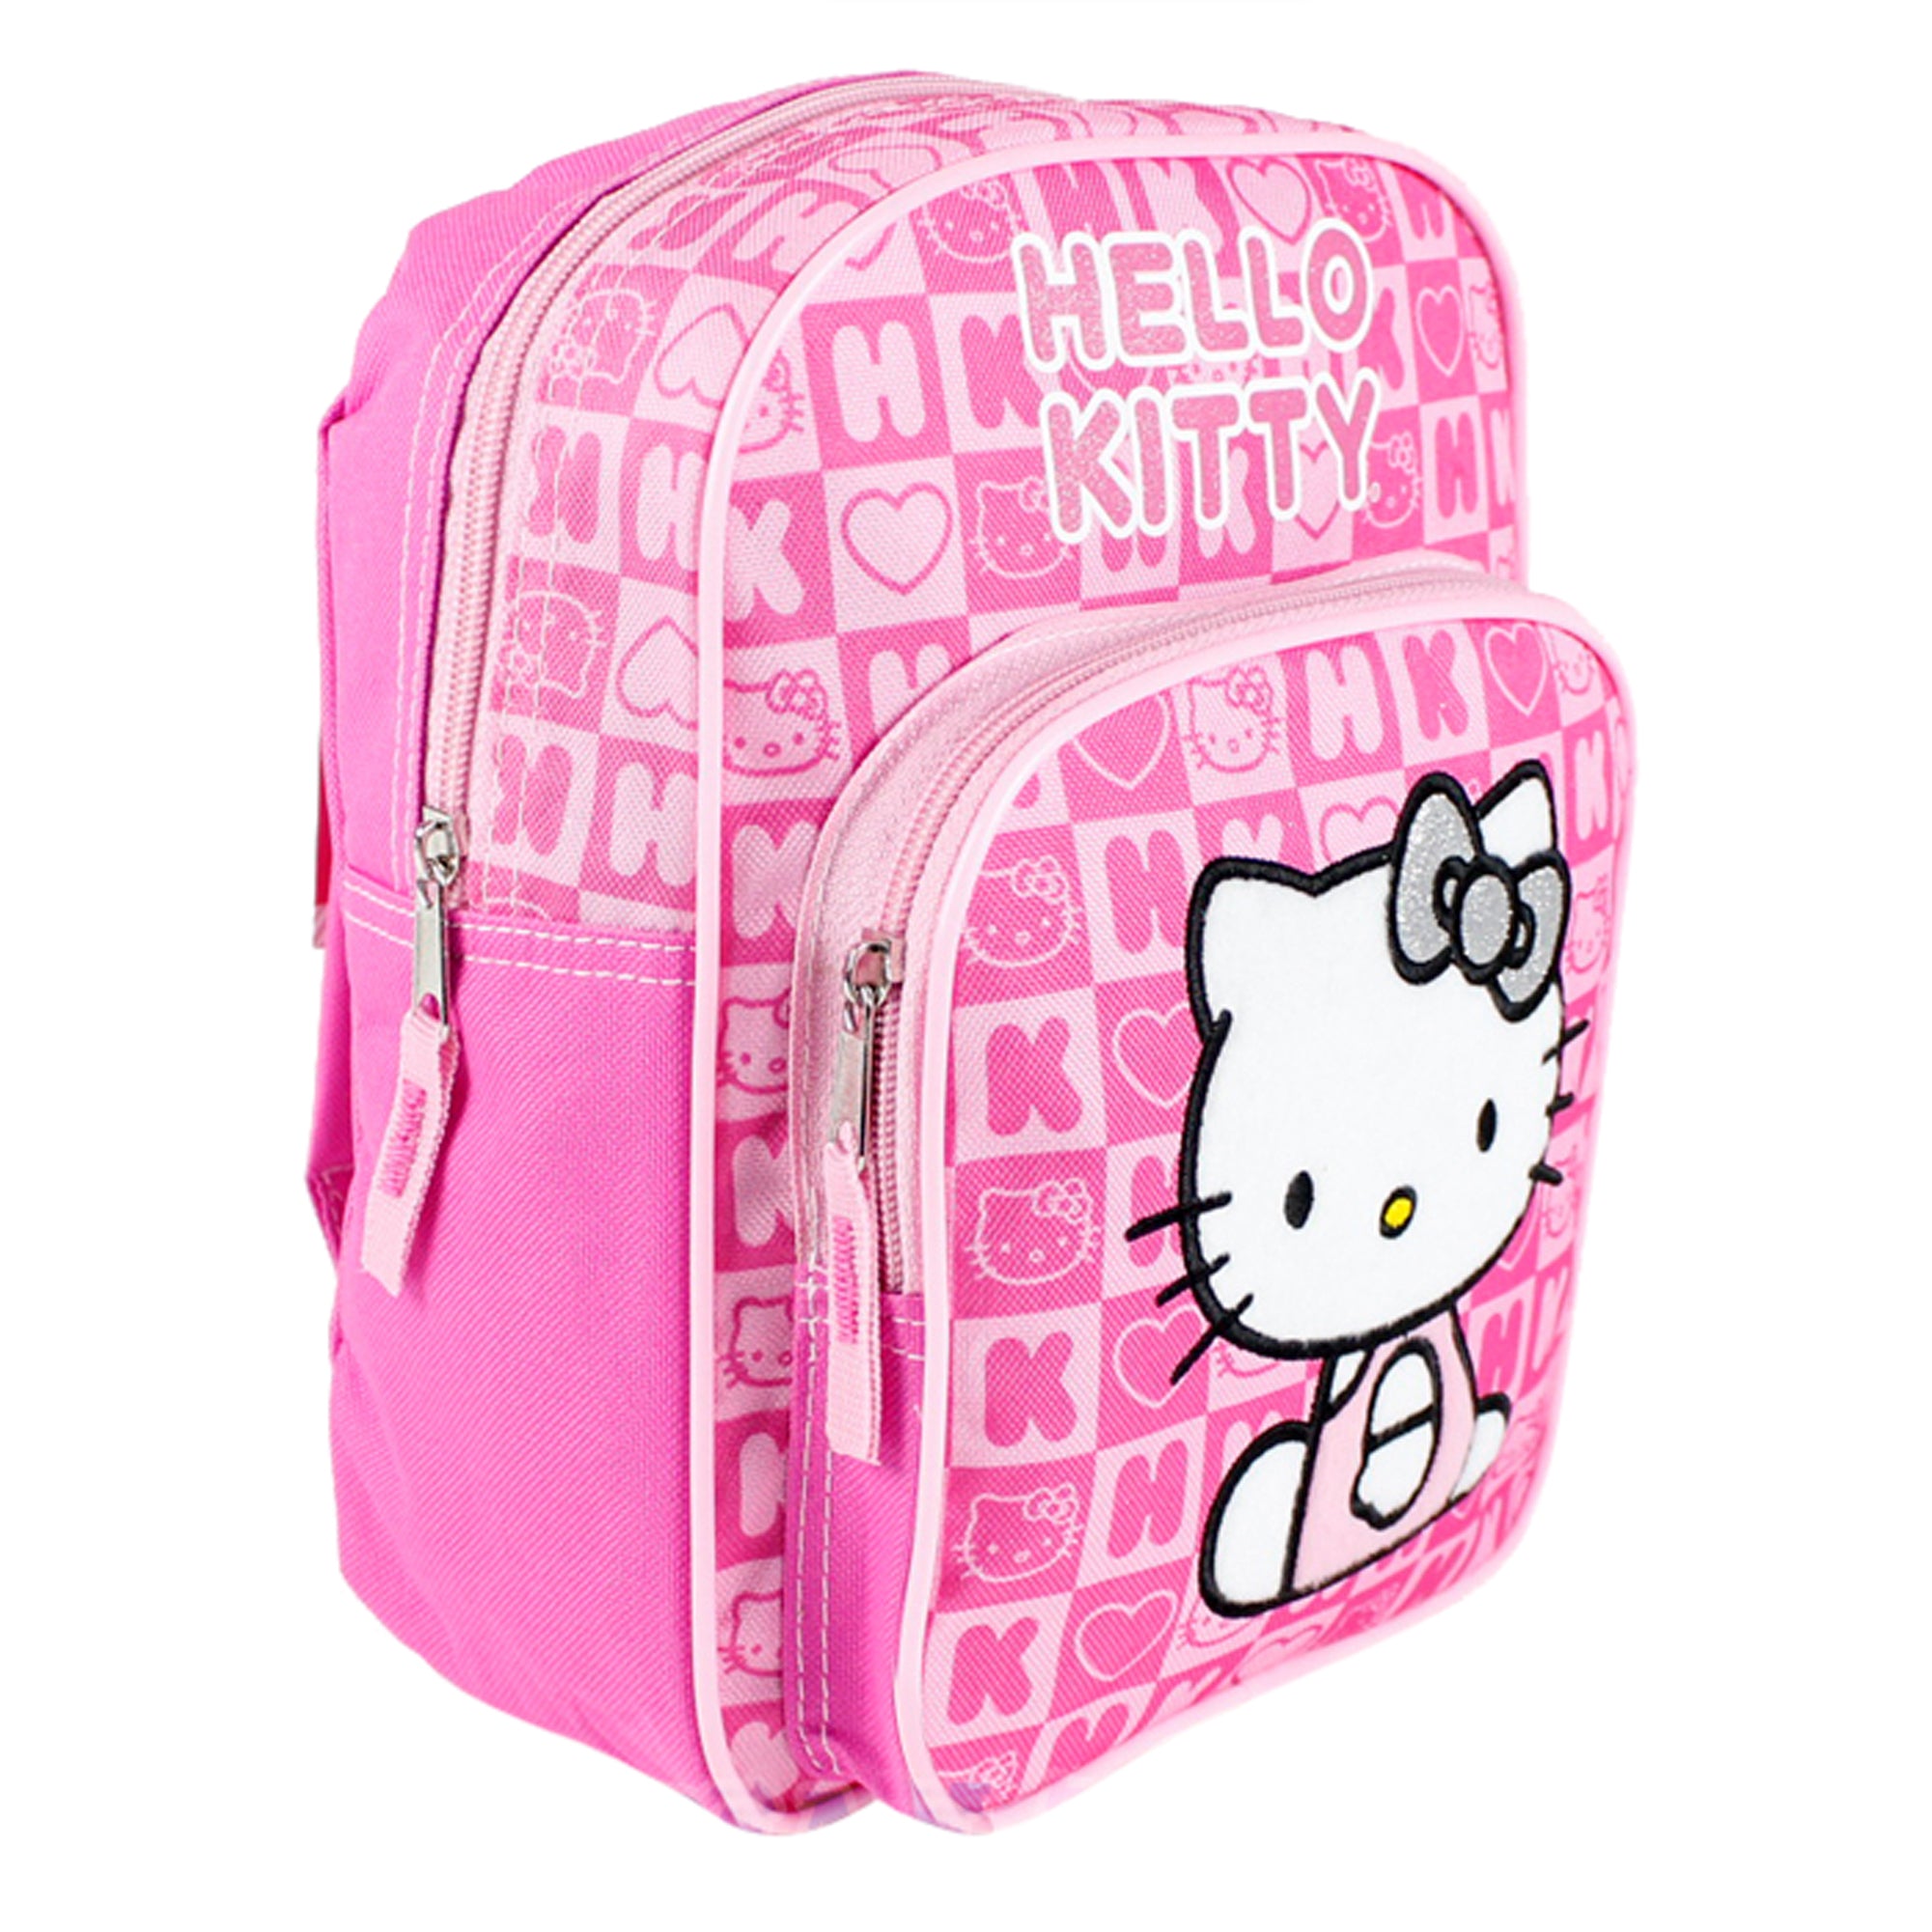 Mini Backpack - - Pink Box Checker New School Bag Book Girls 82350 - image 2 of 4